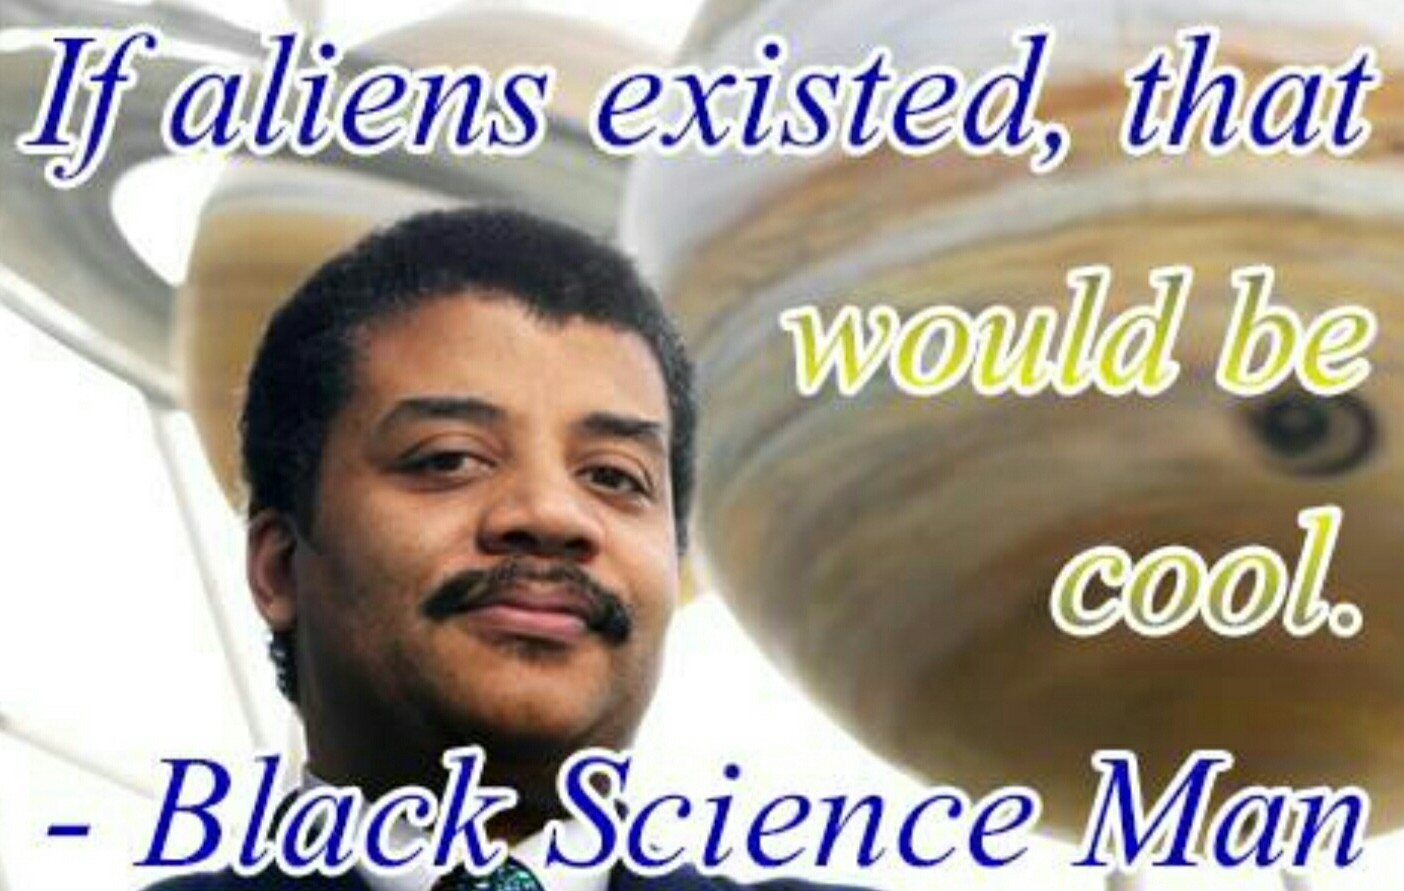 black science matters - meme